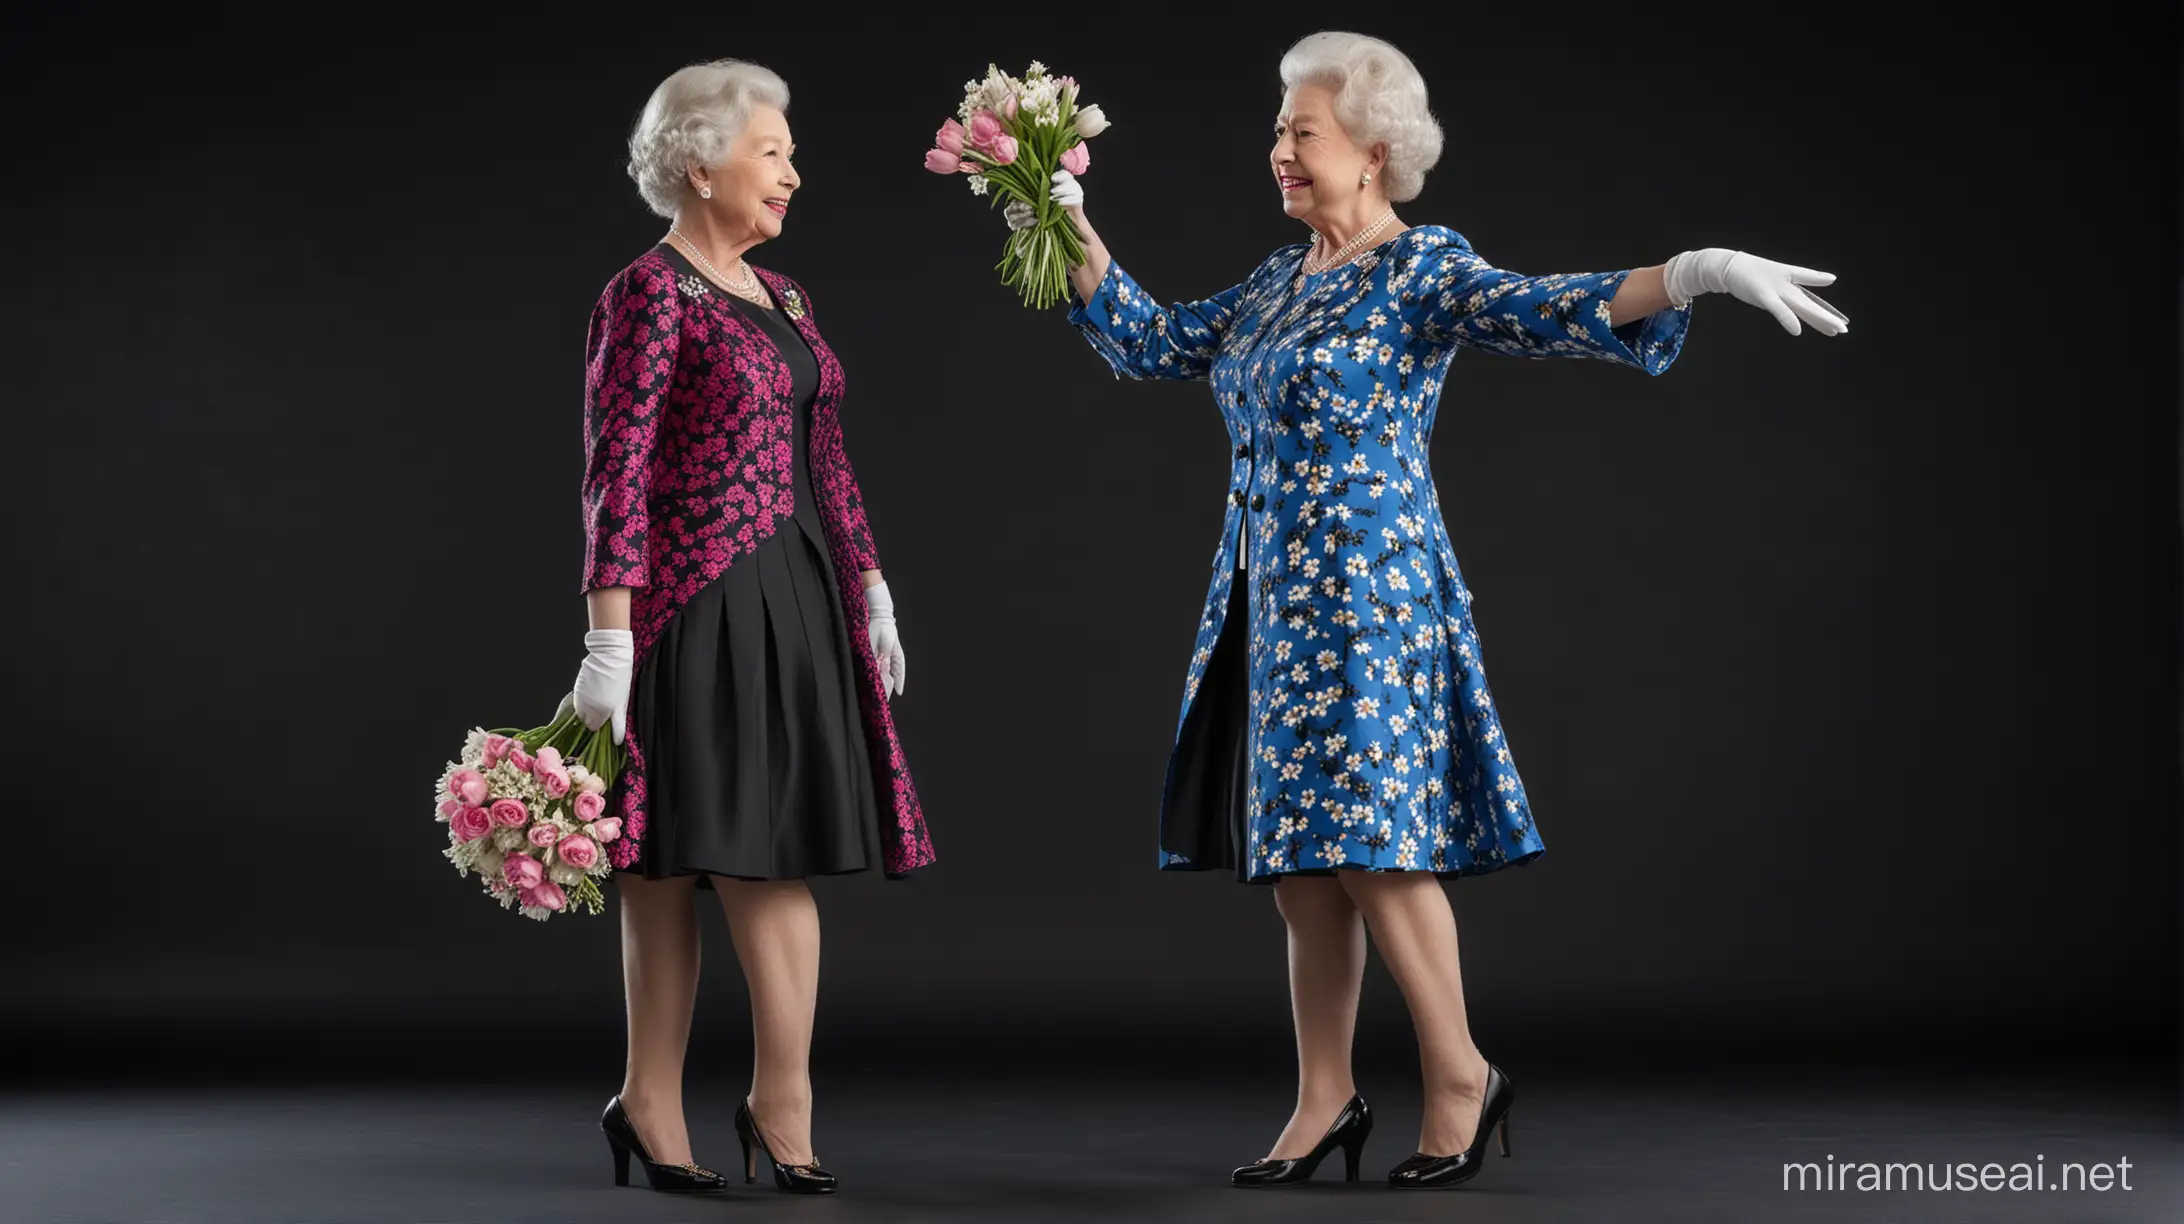 Elegant Portraits of Queen Elizabeth I and Queen Elizabeth II in Modern Attire amid Floral Splendor